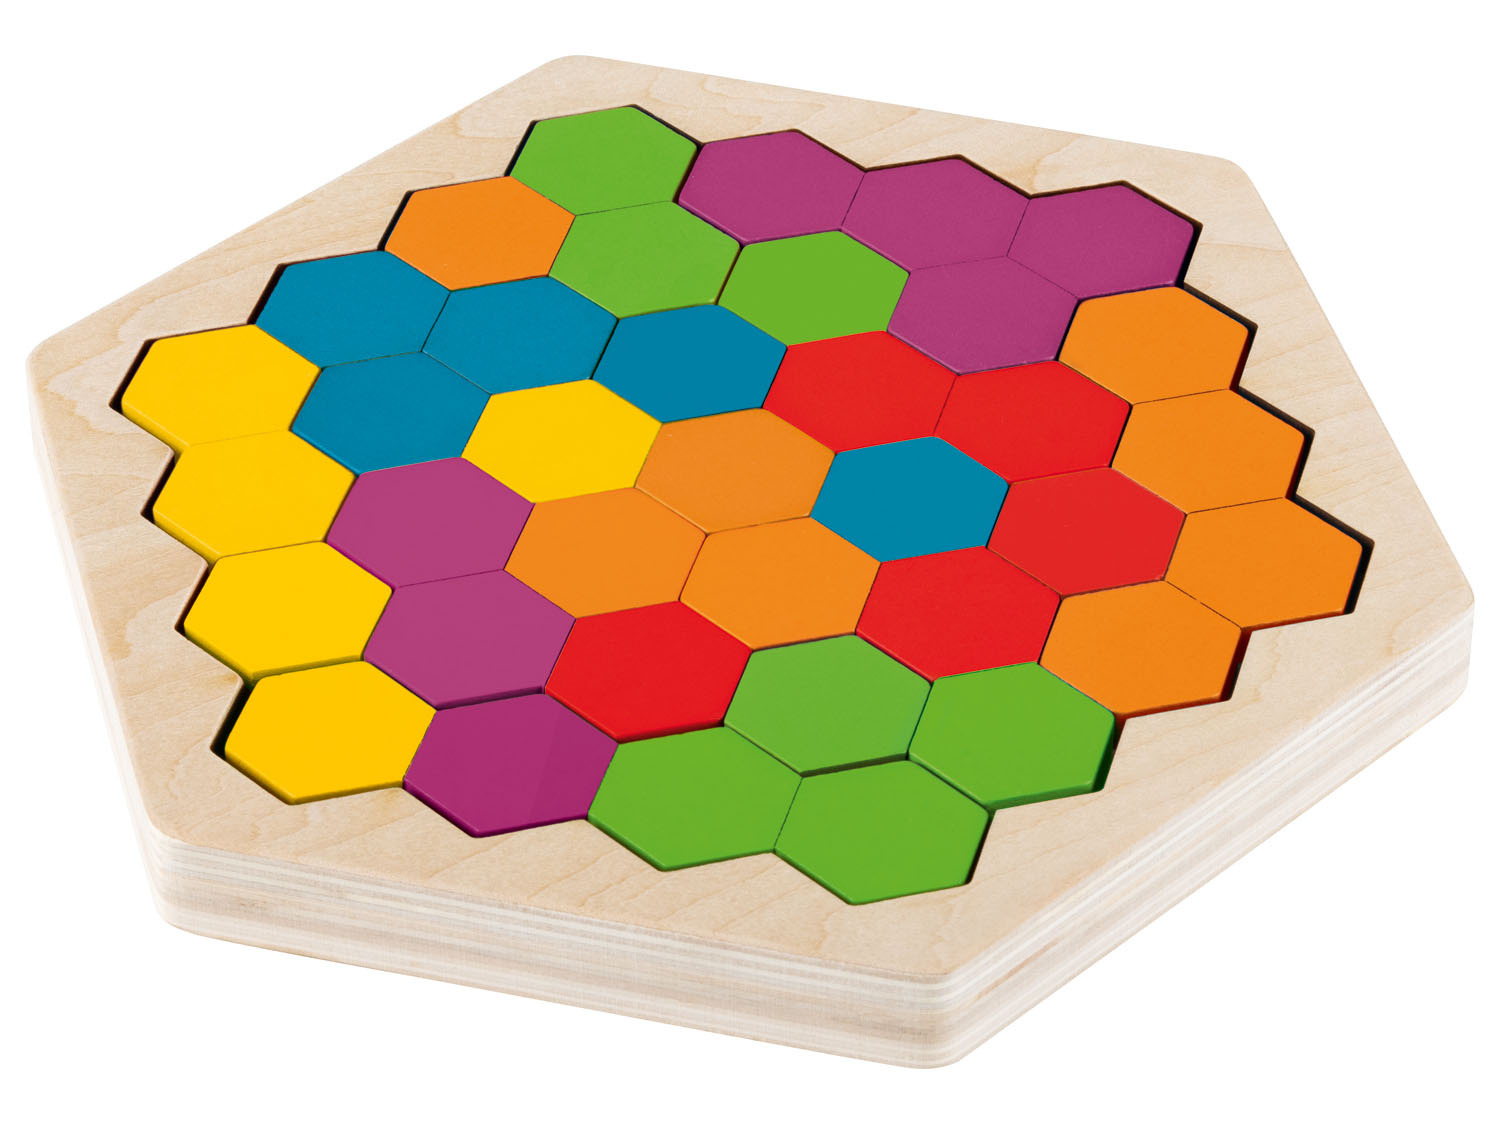 Spitze Playtive Regenbogen Kreis Hexagon Tangram / Verkauf ZR8919 Blume Legespiel / Mesjeuxipad | 